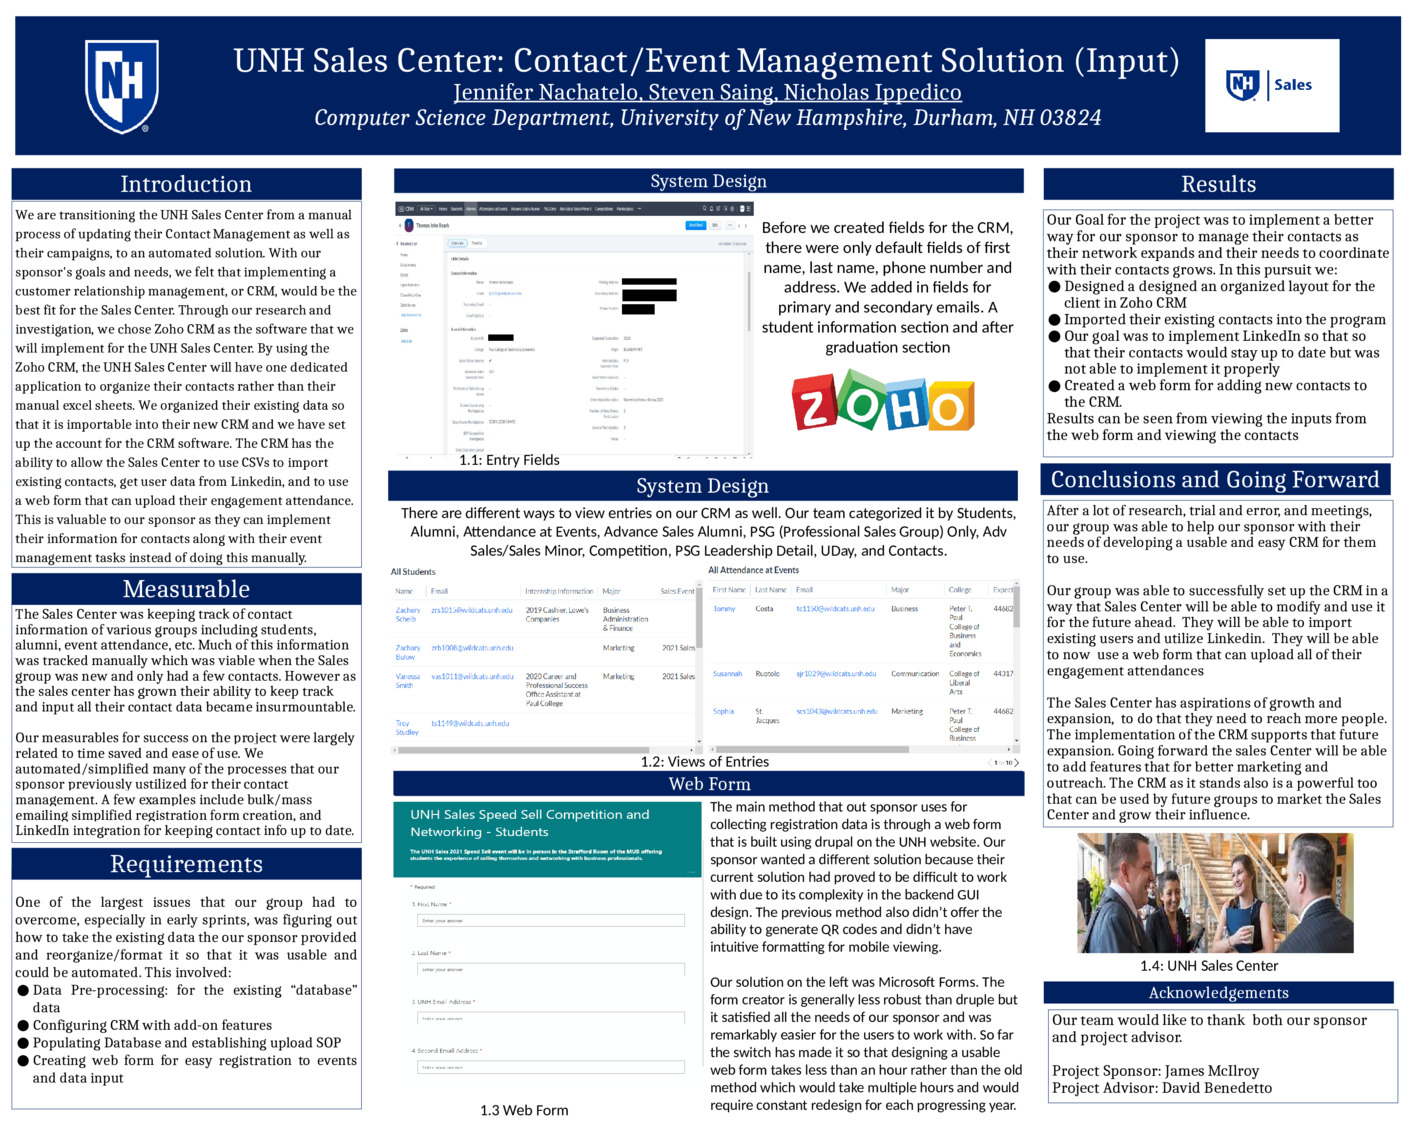 Unh Sales Center: Contact/Event Management Solution (Input) by jtn1017